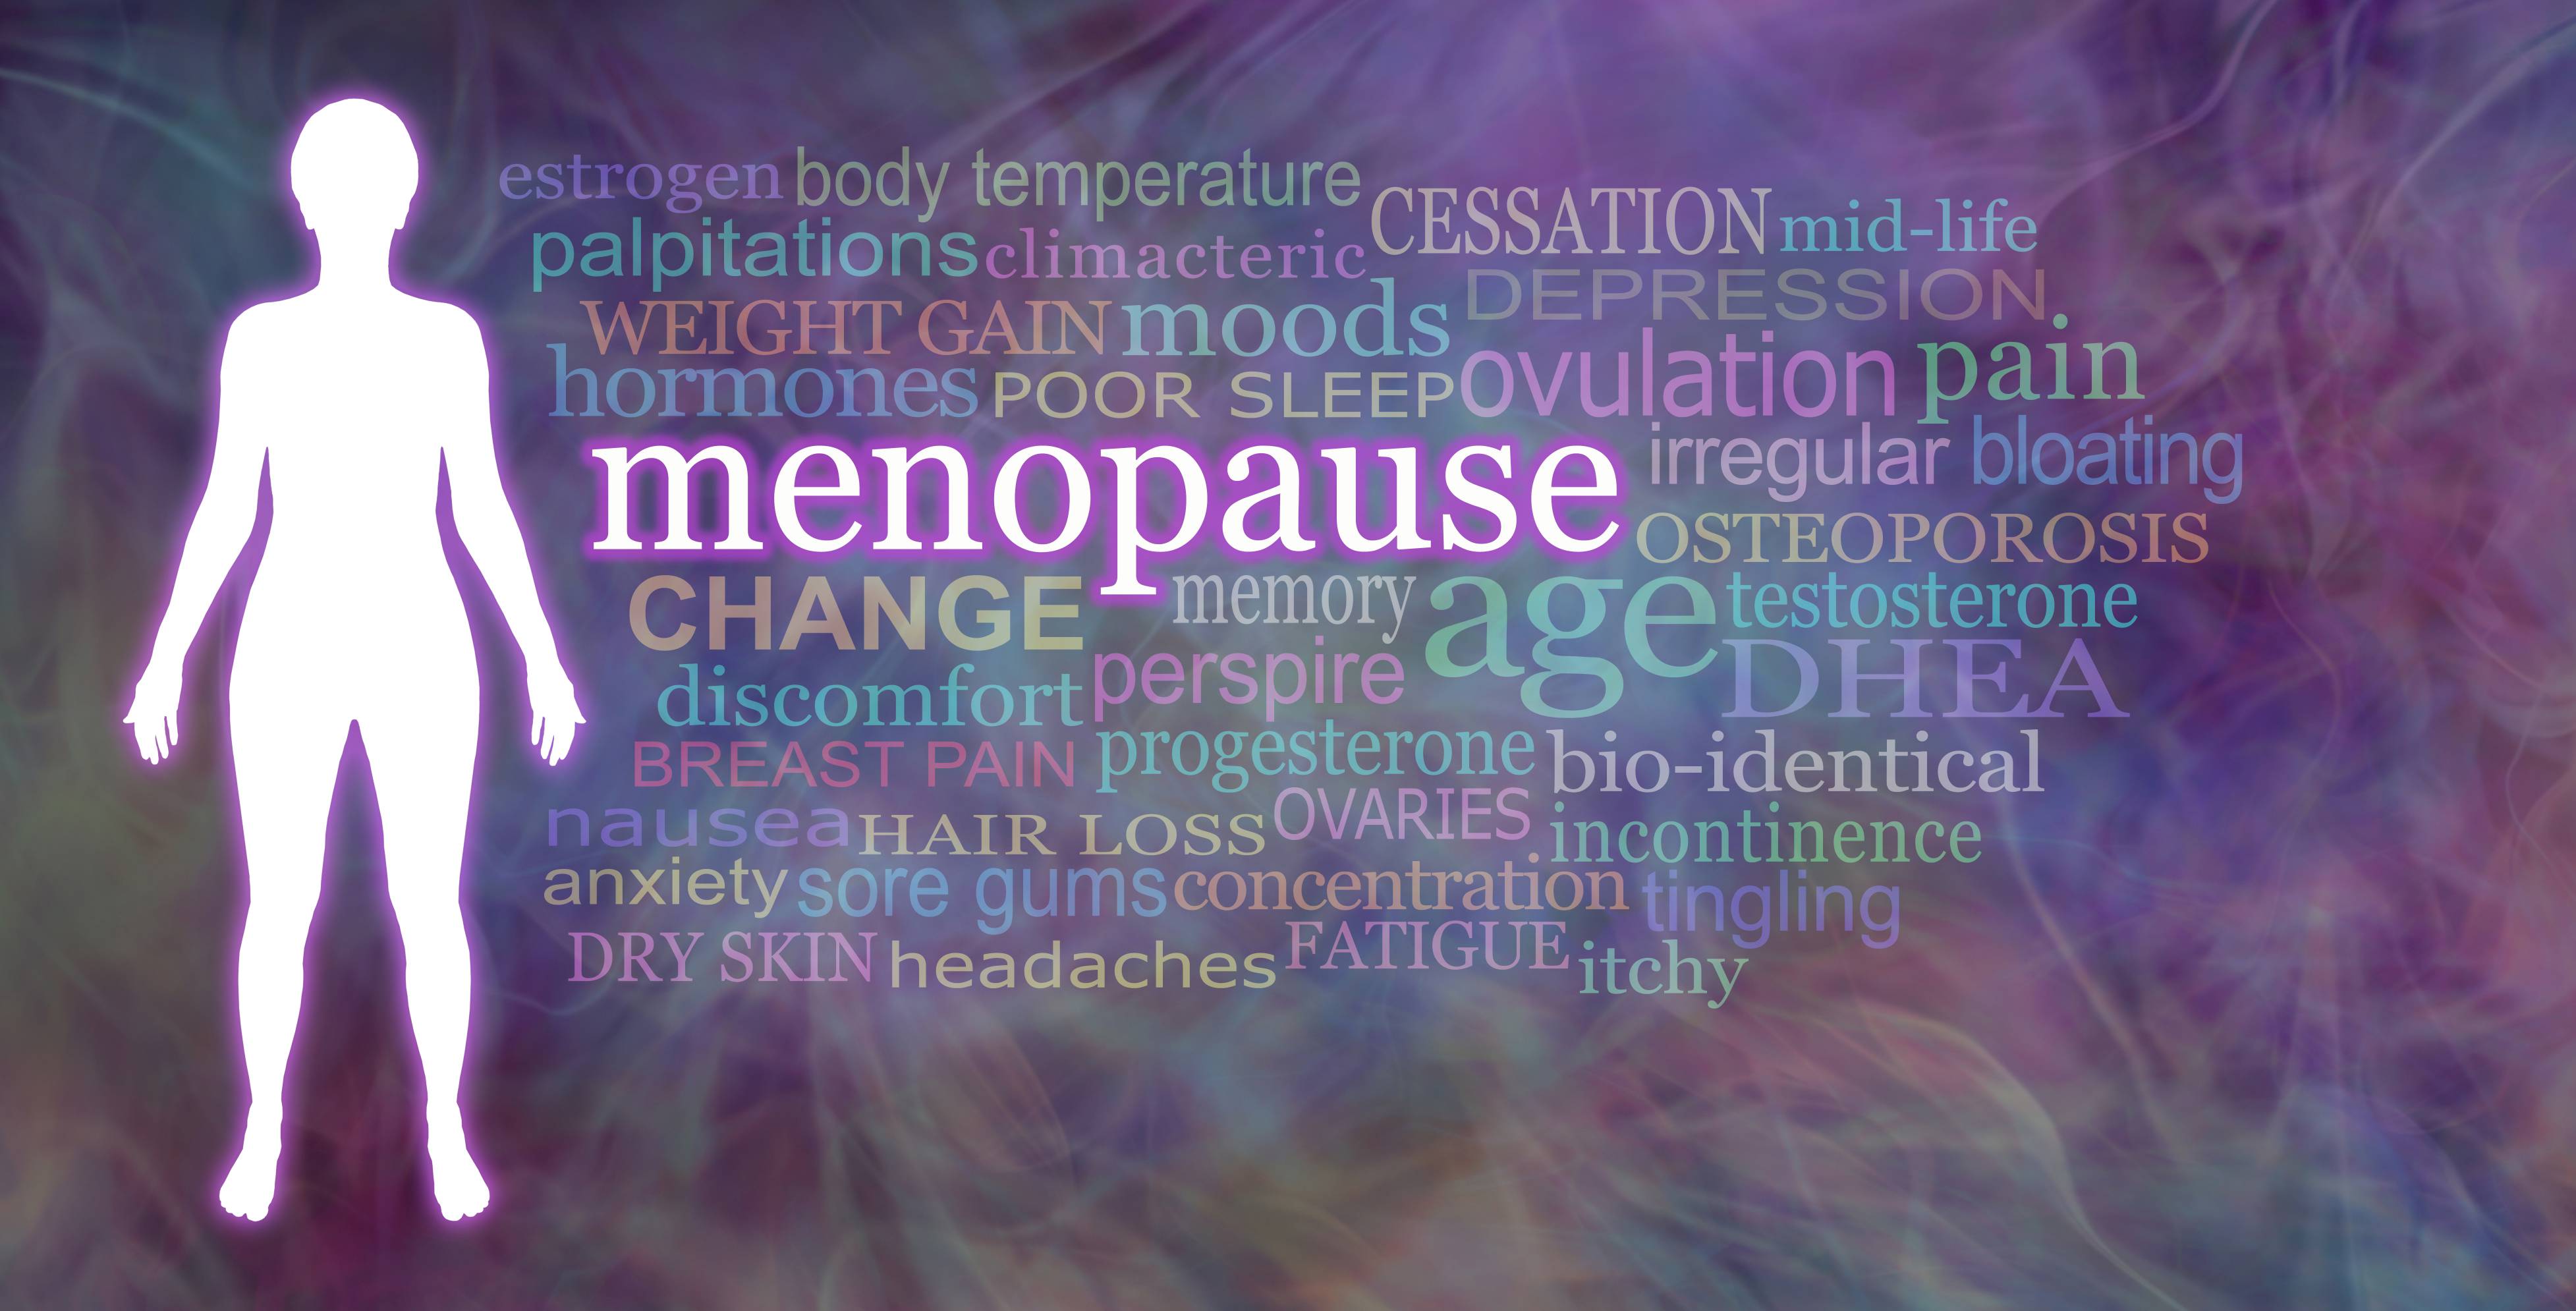 Menopausal Syndrome